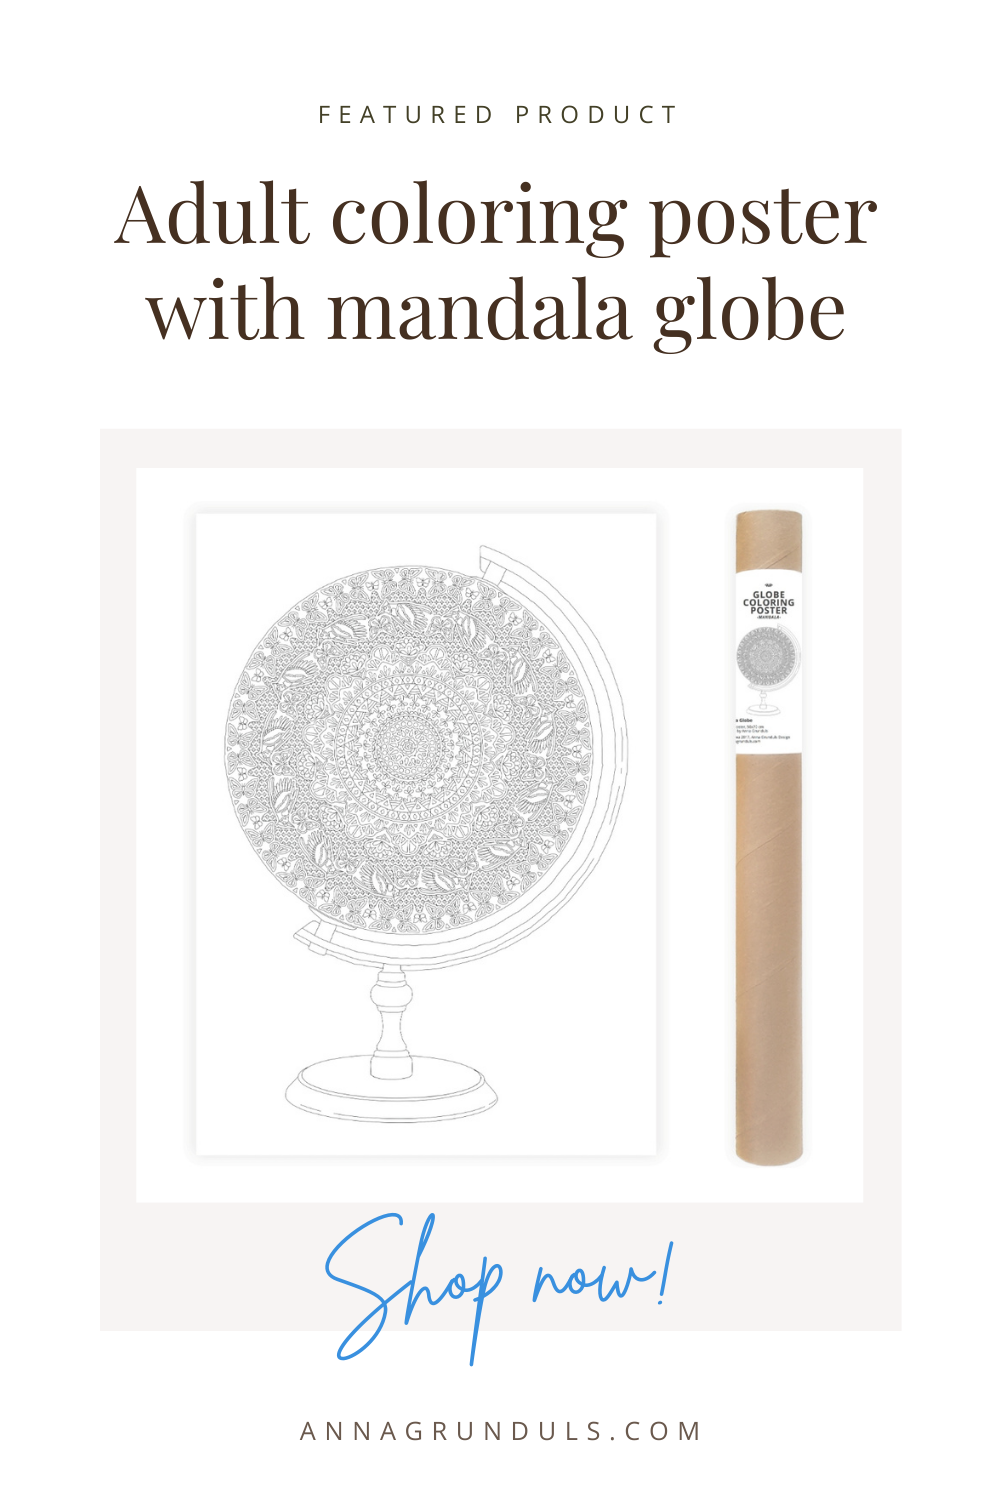 mandala globe poster for adult coloring pinterest pin